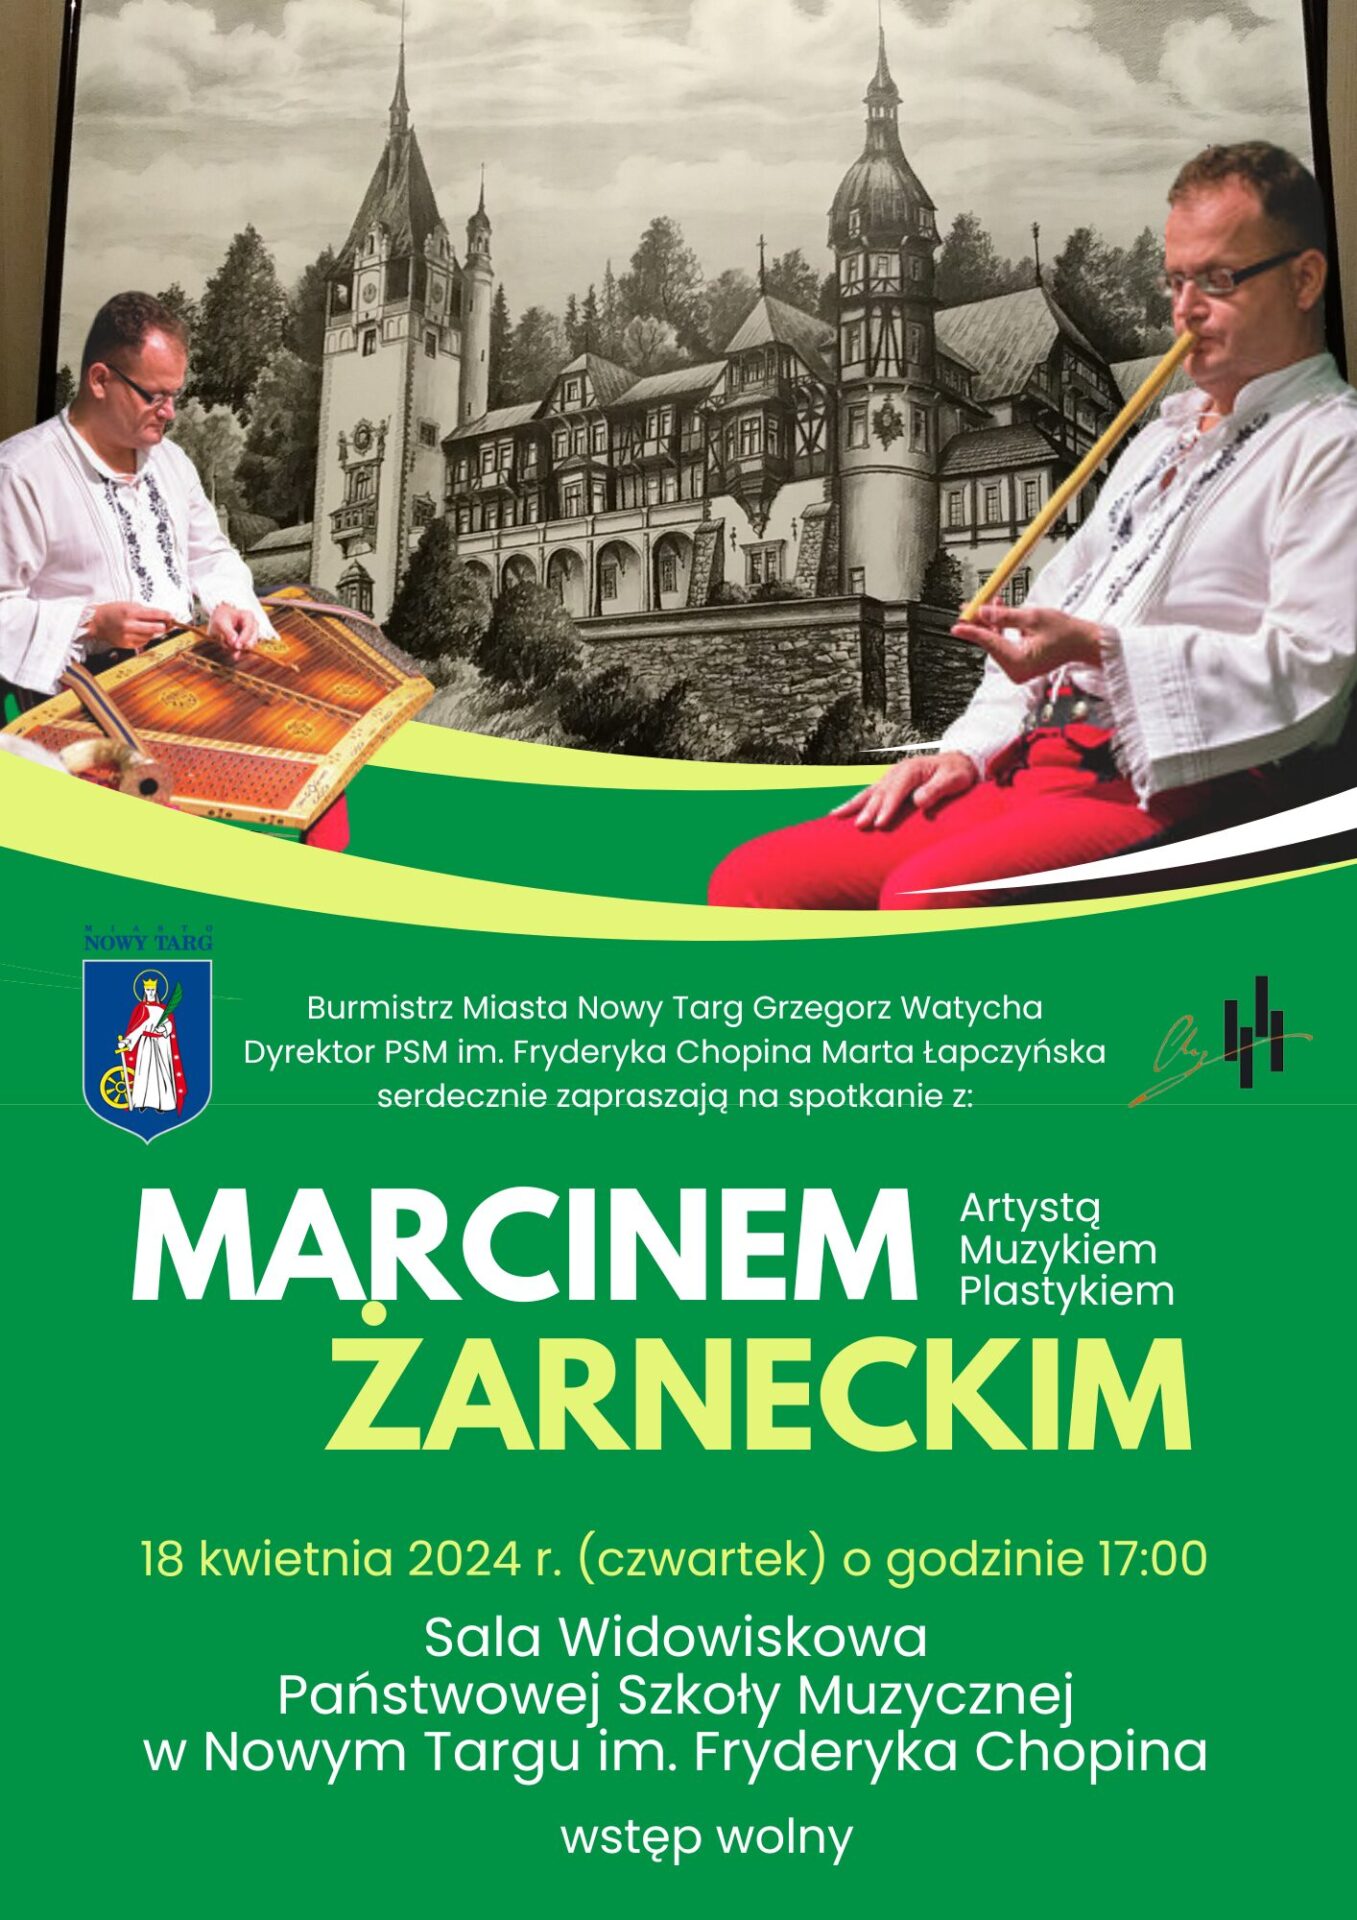 Spotkanie z Marcinem Żarneckim